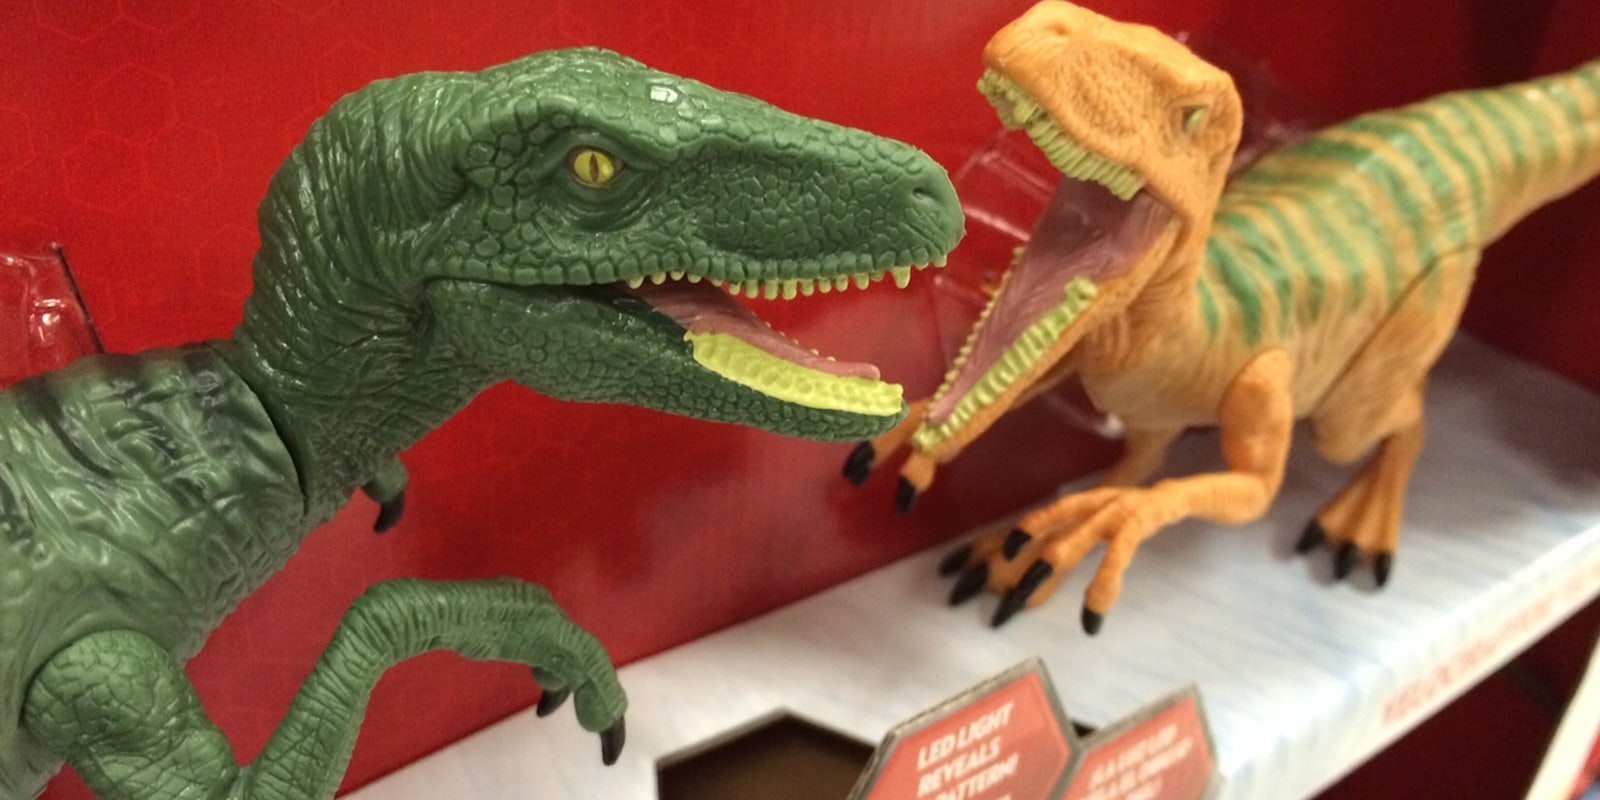 Hasbro felt the need to make the 'Jurassic World' raptor toys male